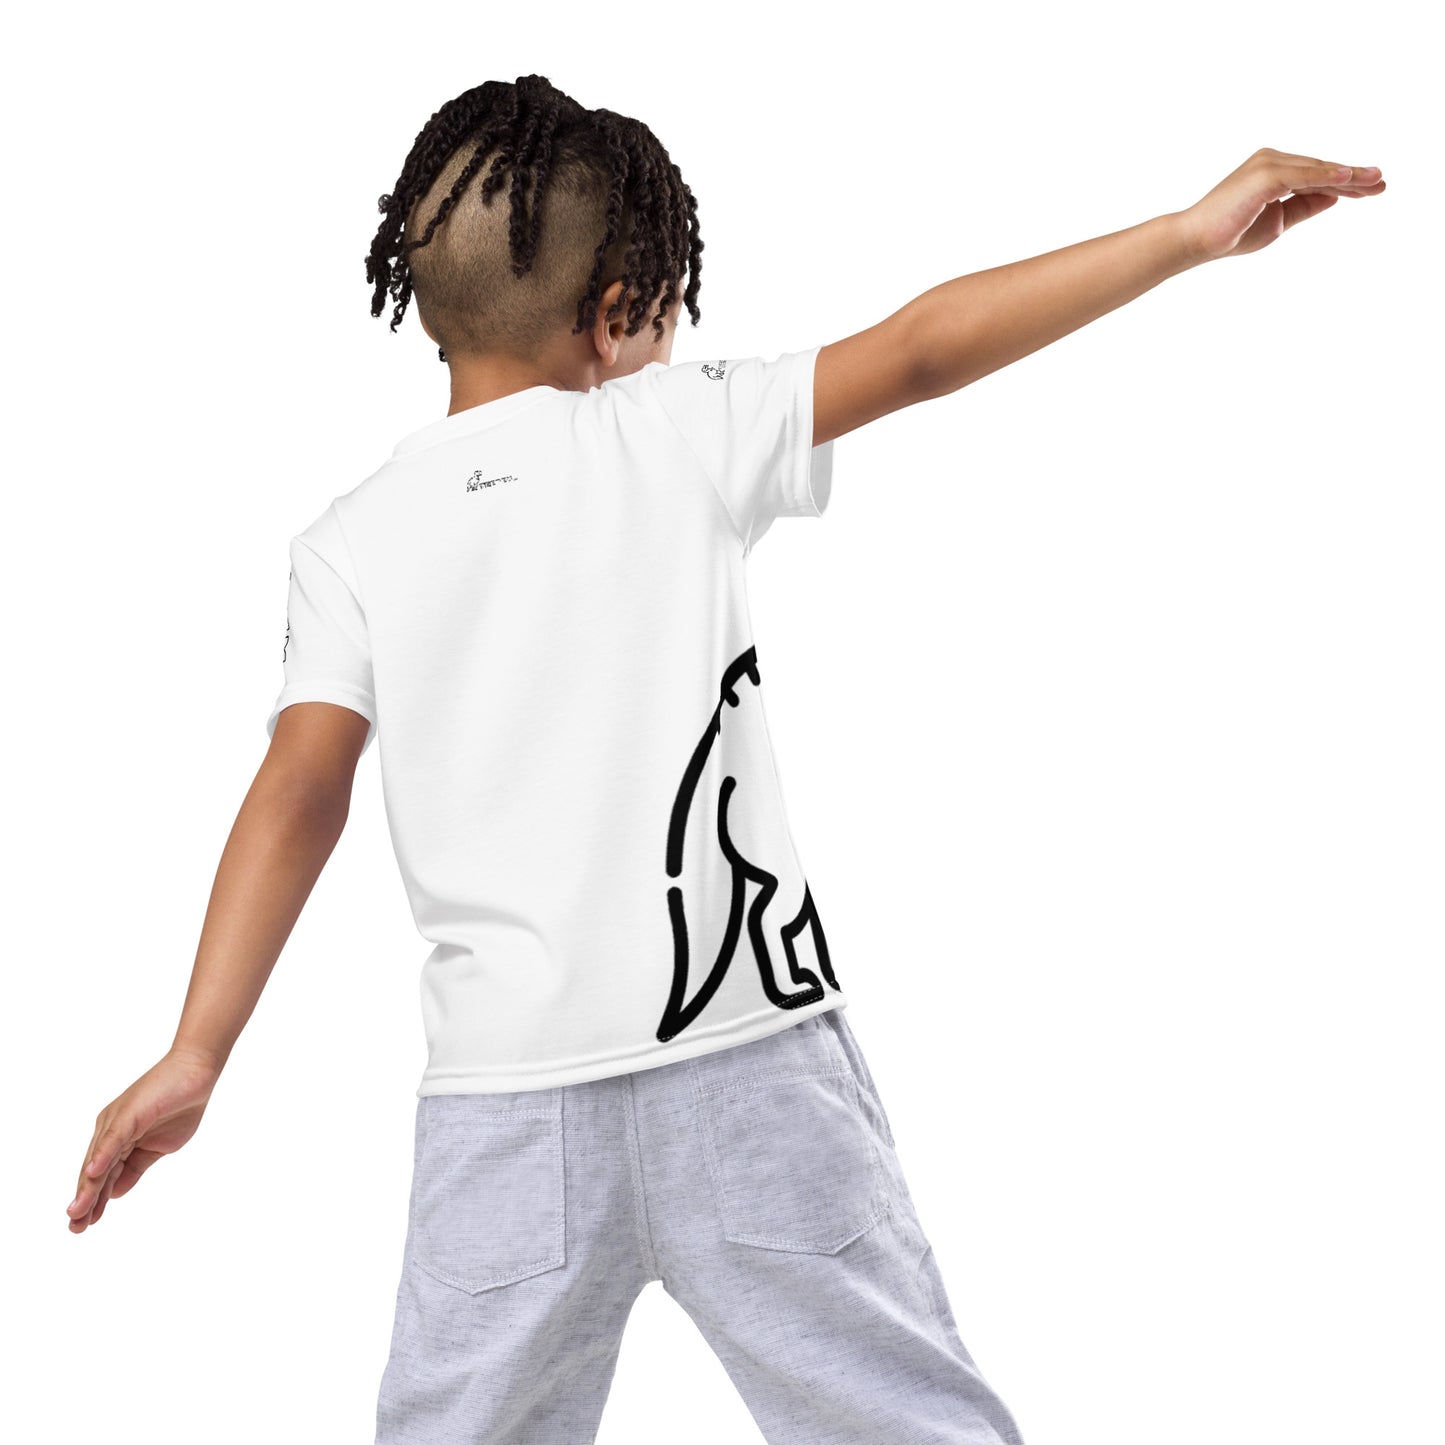 TeeRex Kids "Sydney" Crew Neck Tee-Shirt - Limited First Edition